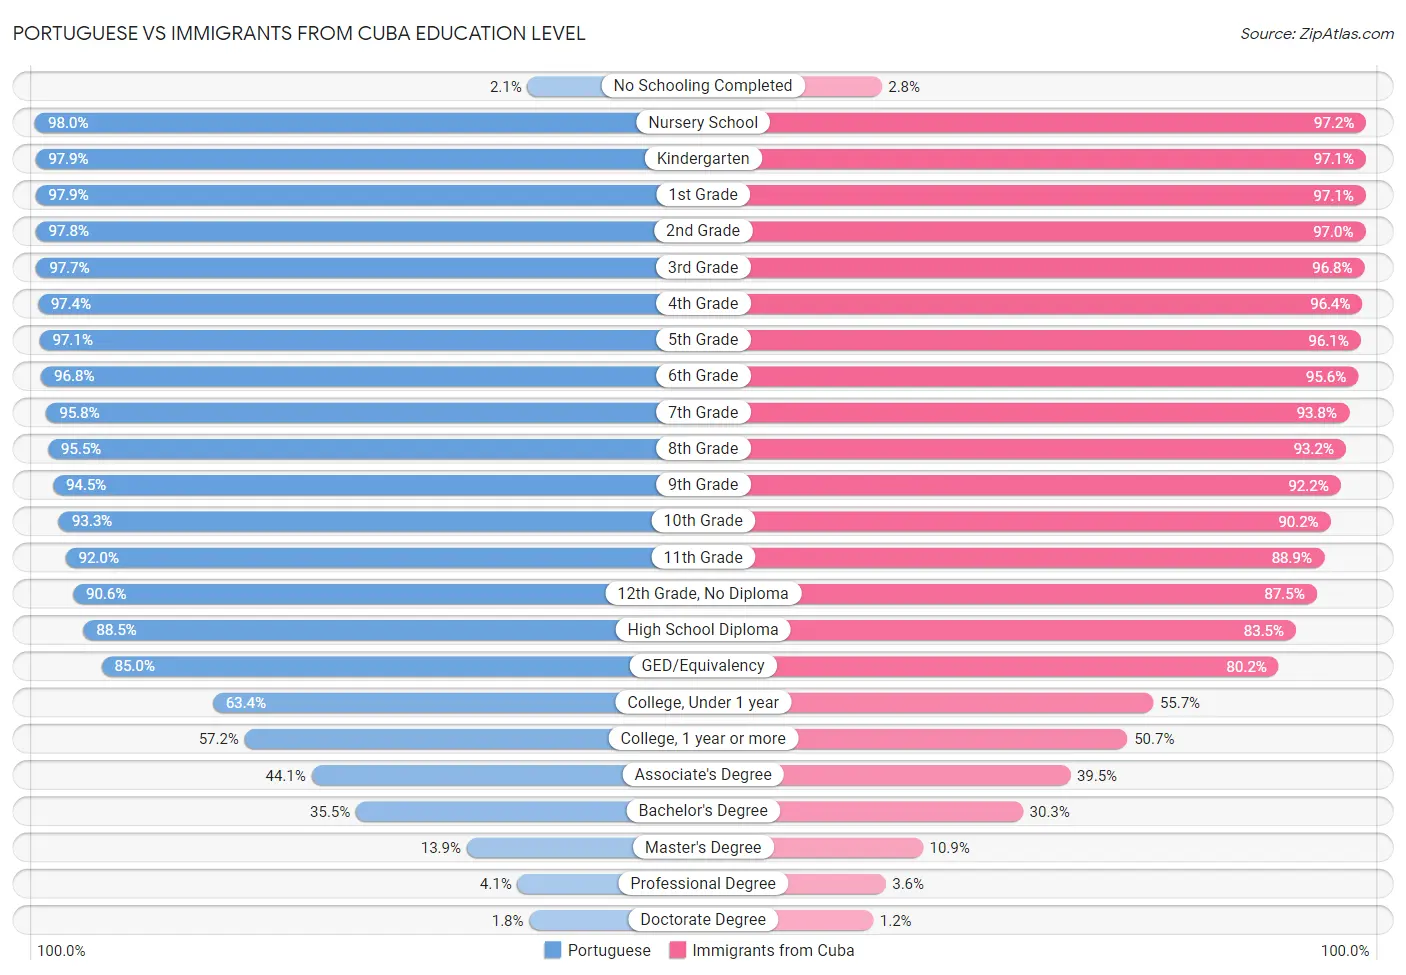 Portuguese vs Immigrants from Cuba Education Level